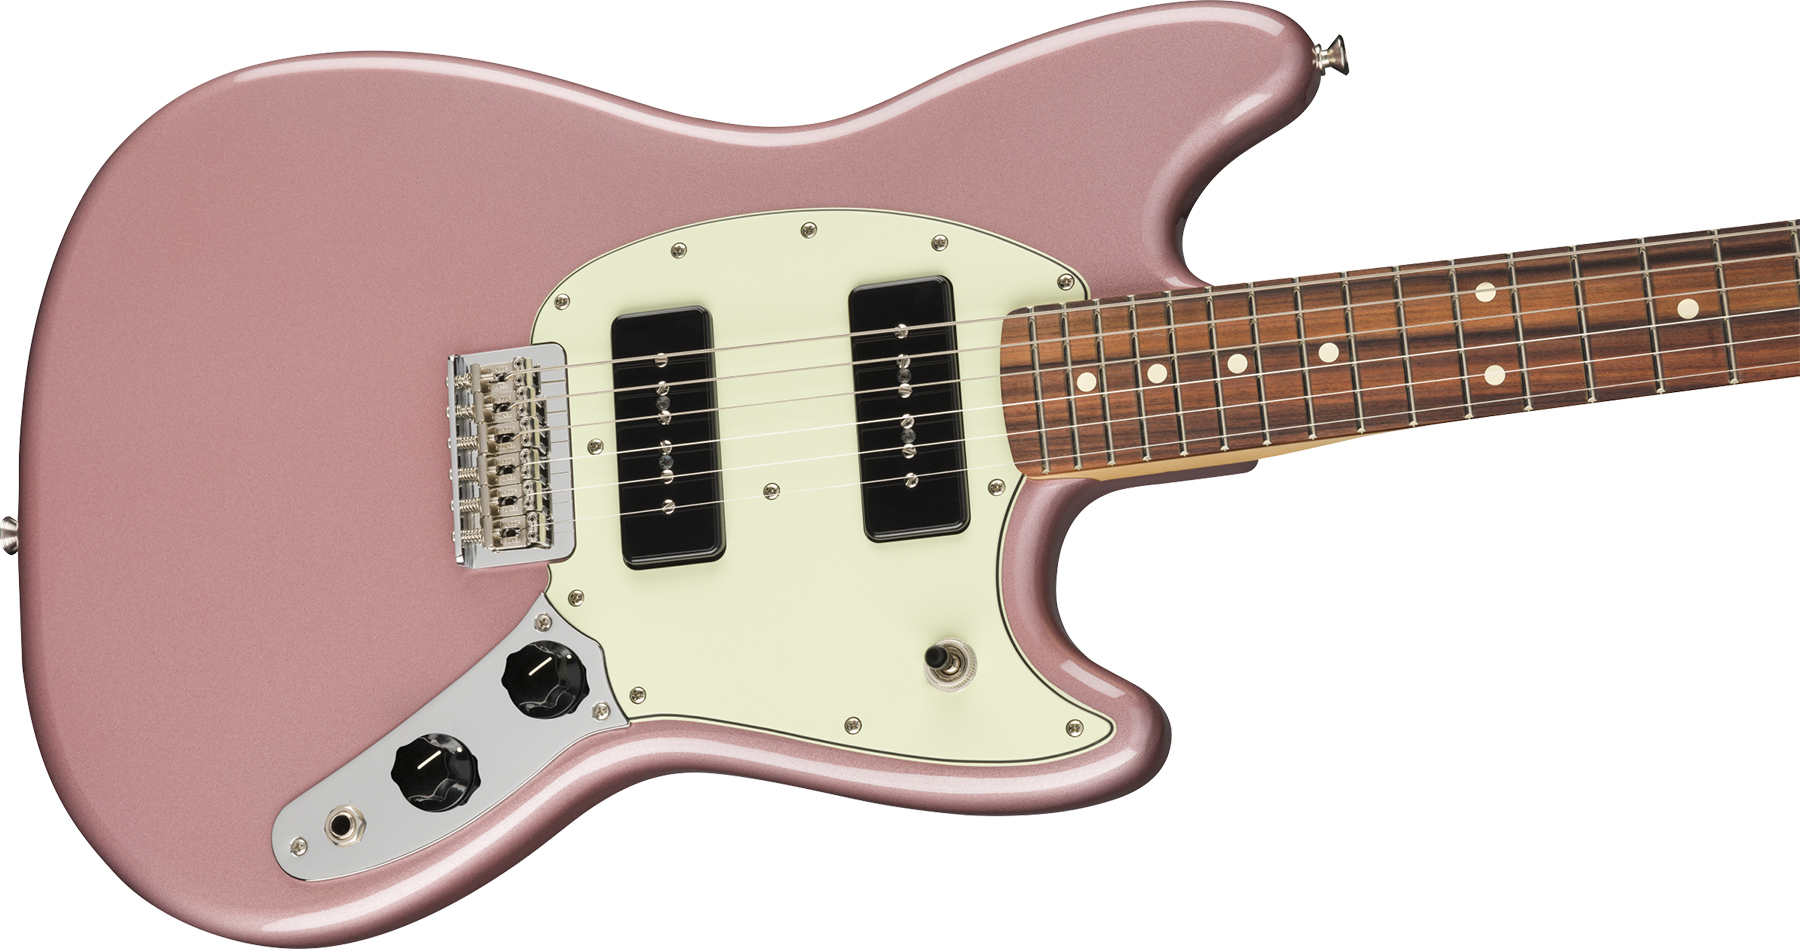 Fender Mustang Player 90 Mex Ht 2p90 Pf - Burgundy Mist Metallic - Retro rock electric guitar - Variation 2